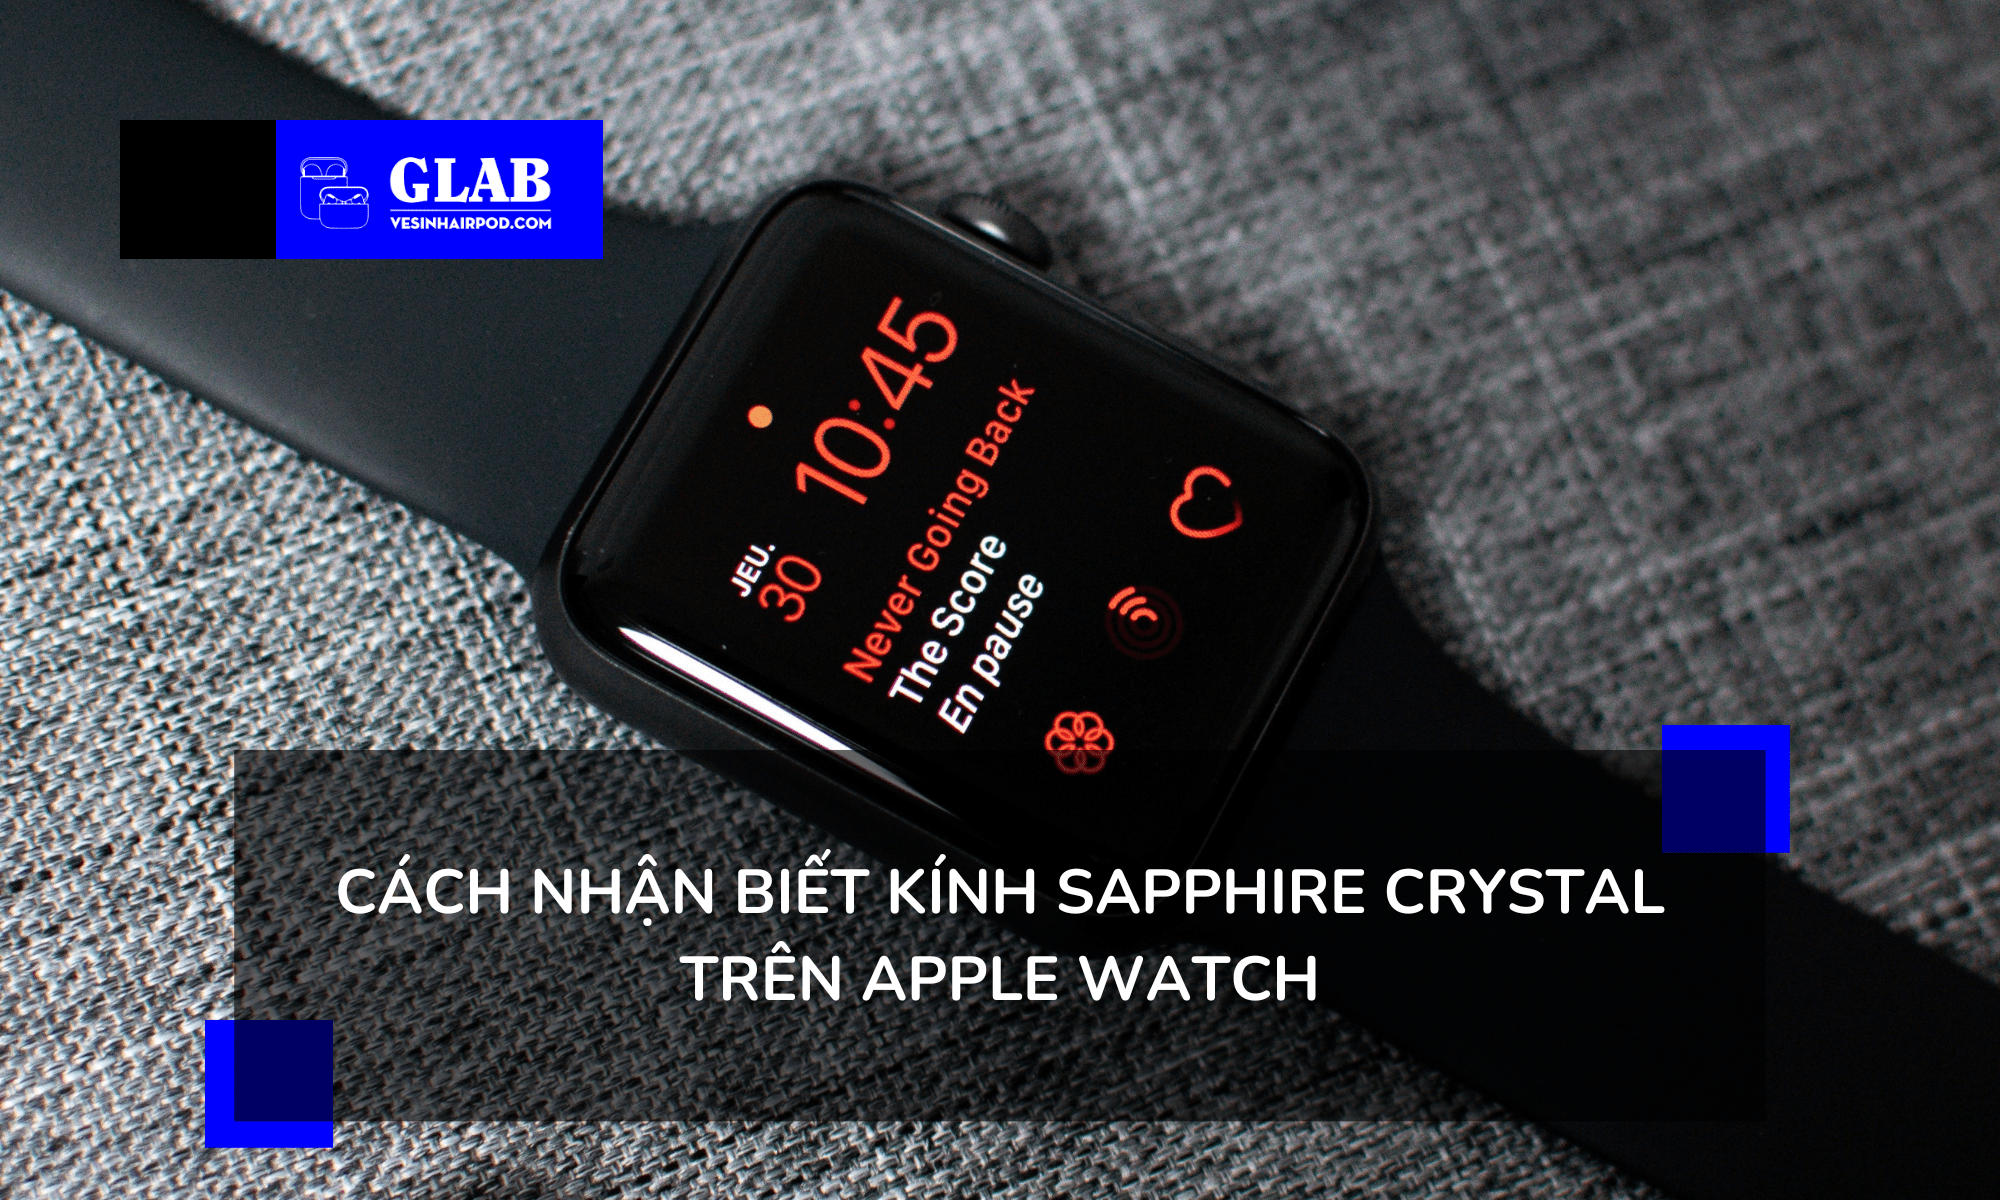 kinh-Sapphire-Crystal-tren-Apple-Watch